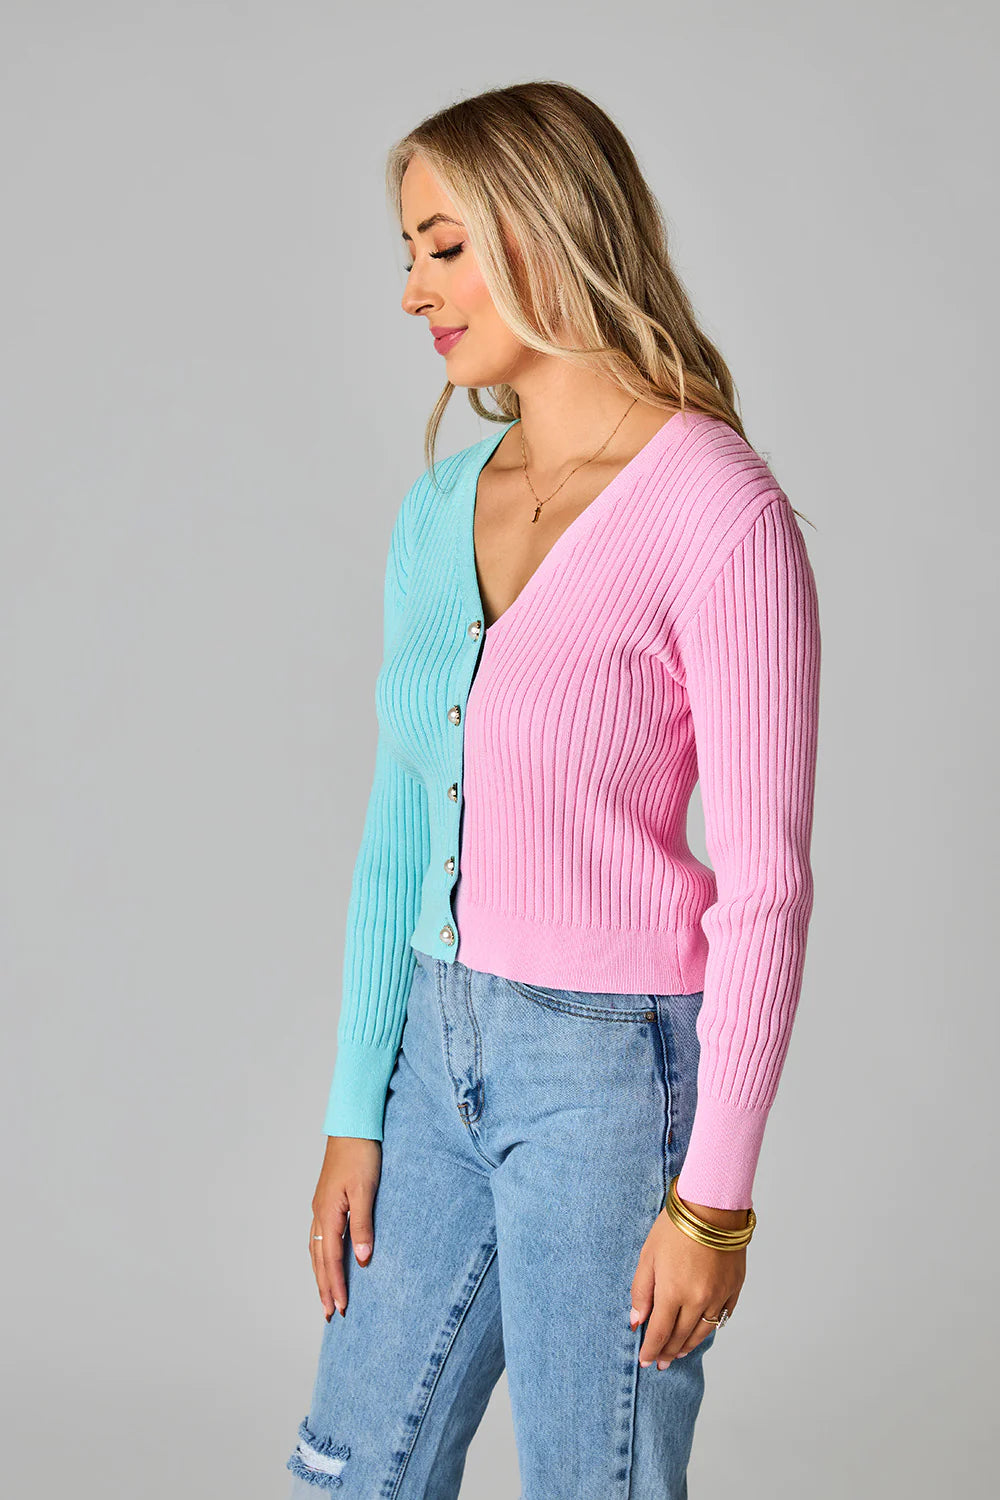 BuddyLove Noah Cropped Rib Sweater in Pink/Blue